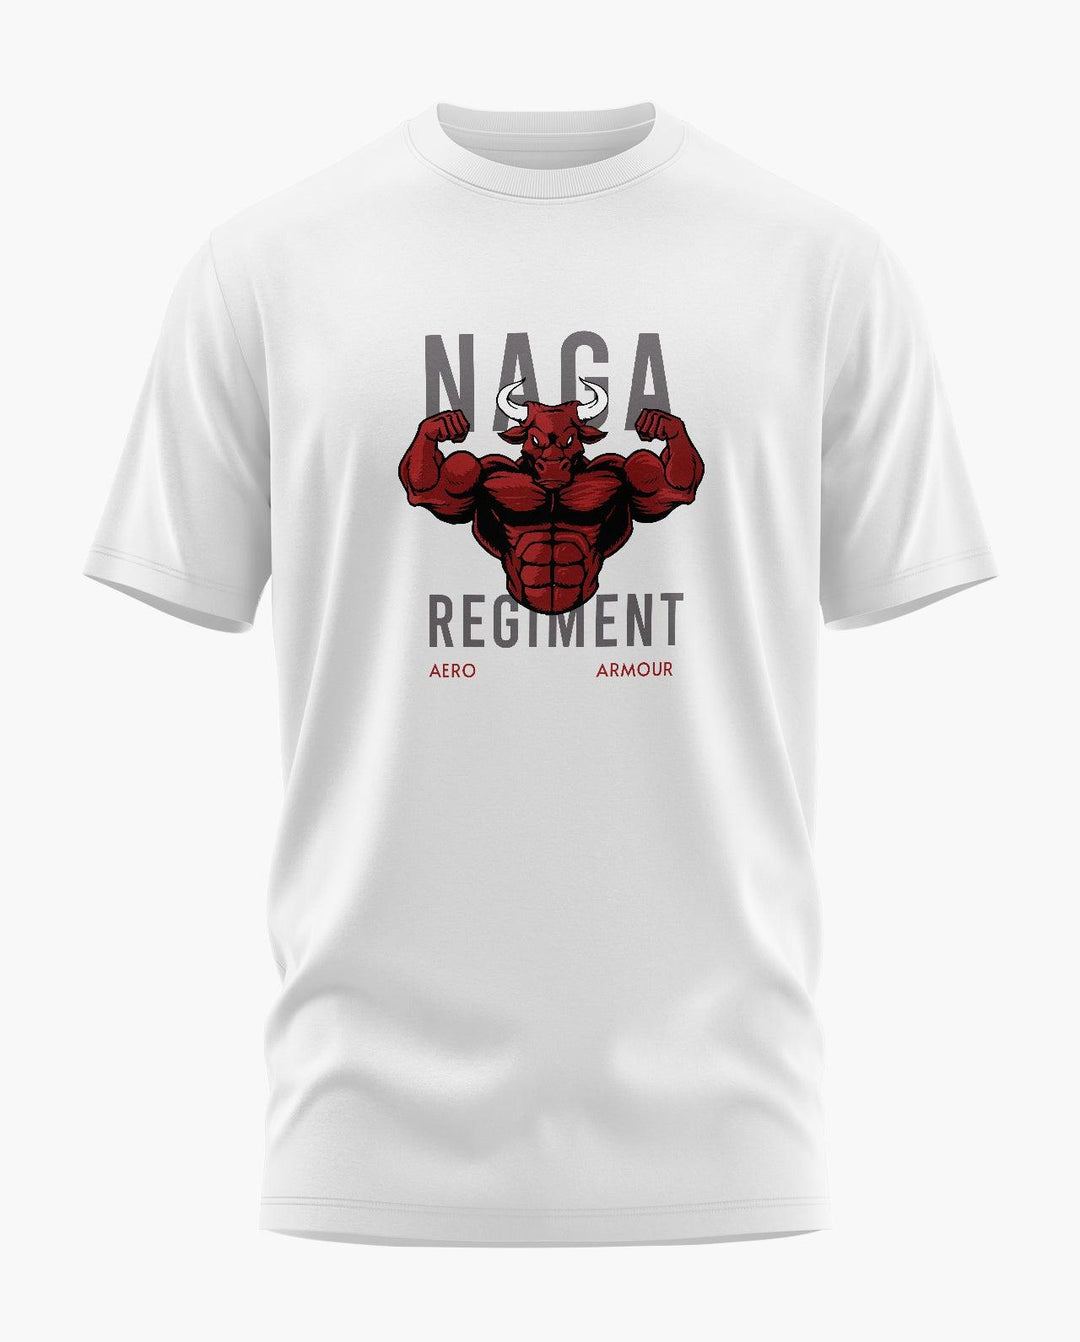 Naga Regiments T-Shirt - Aero Armour